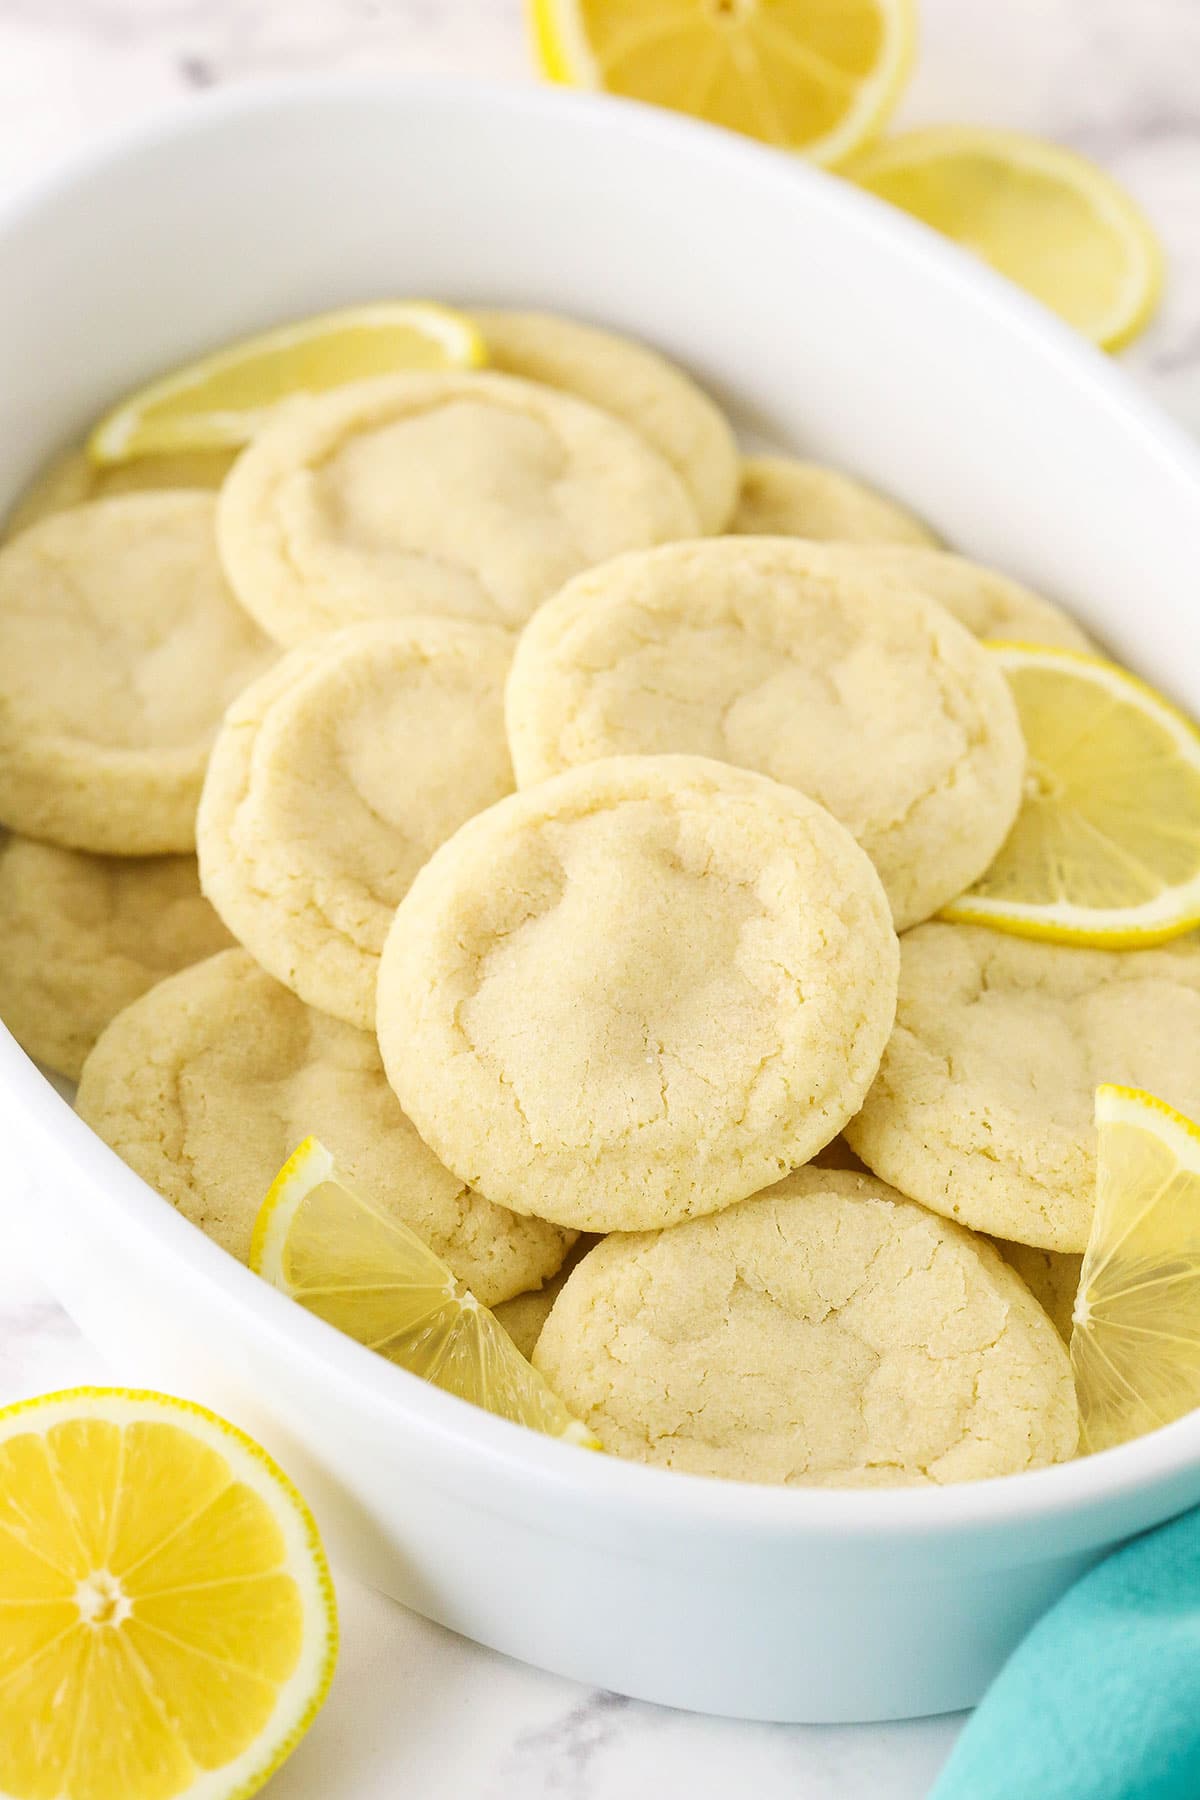 https://www.lifeloveandsugar.com/wp-content/uploads/2022/02/Lemon-Sugar-Cookies2.jpg